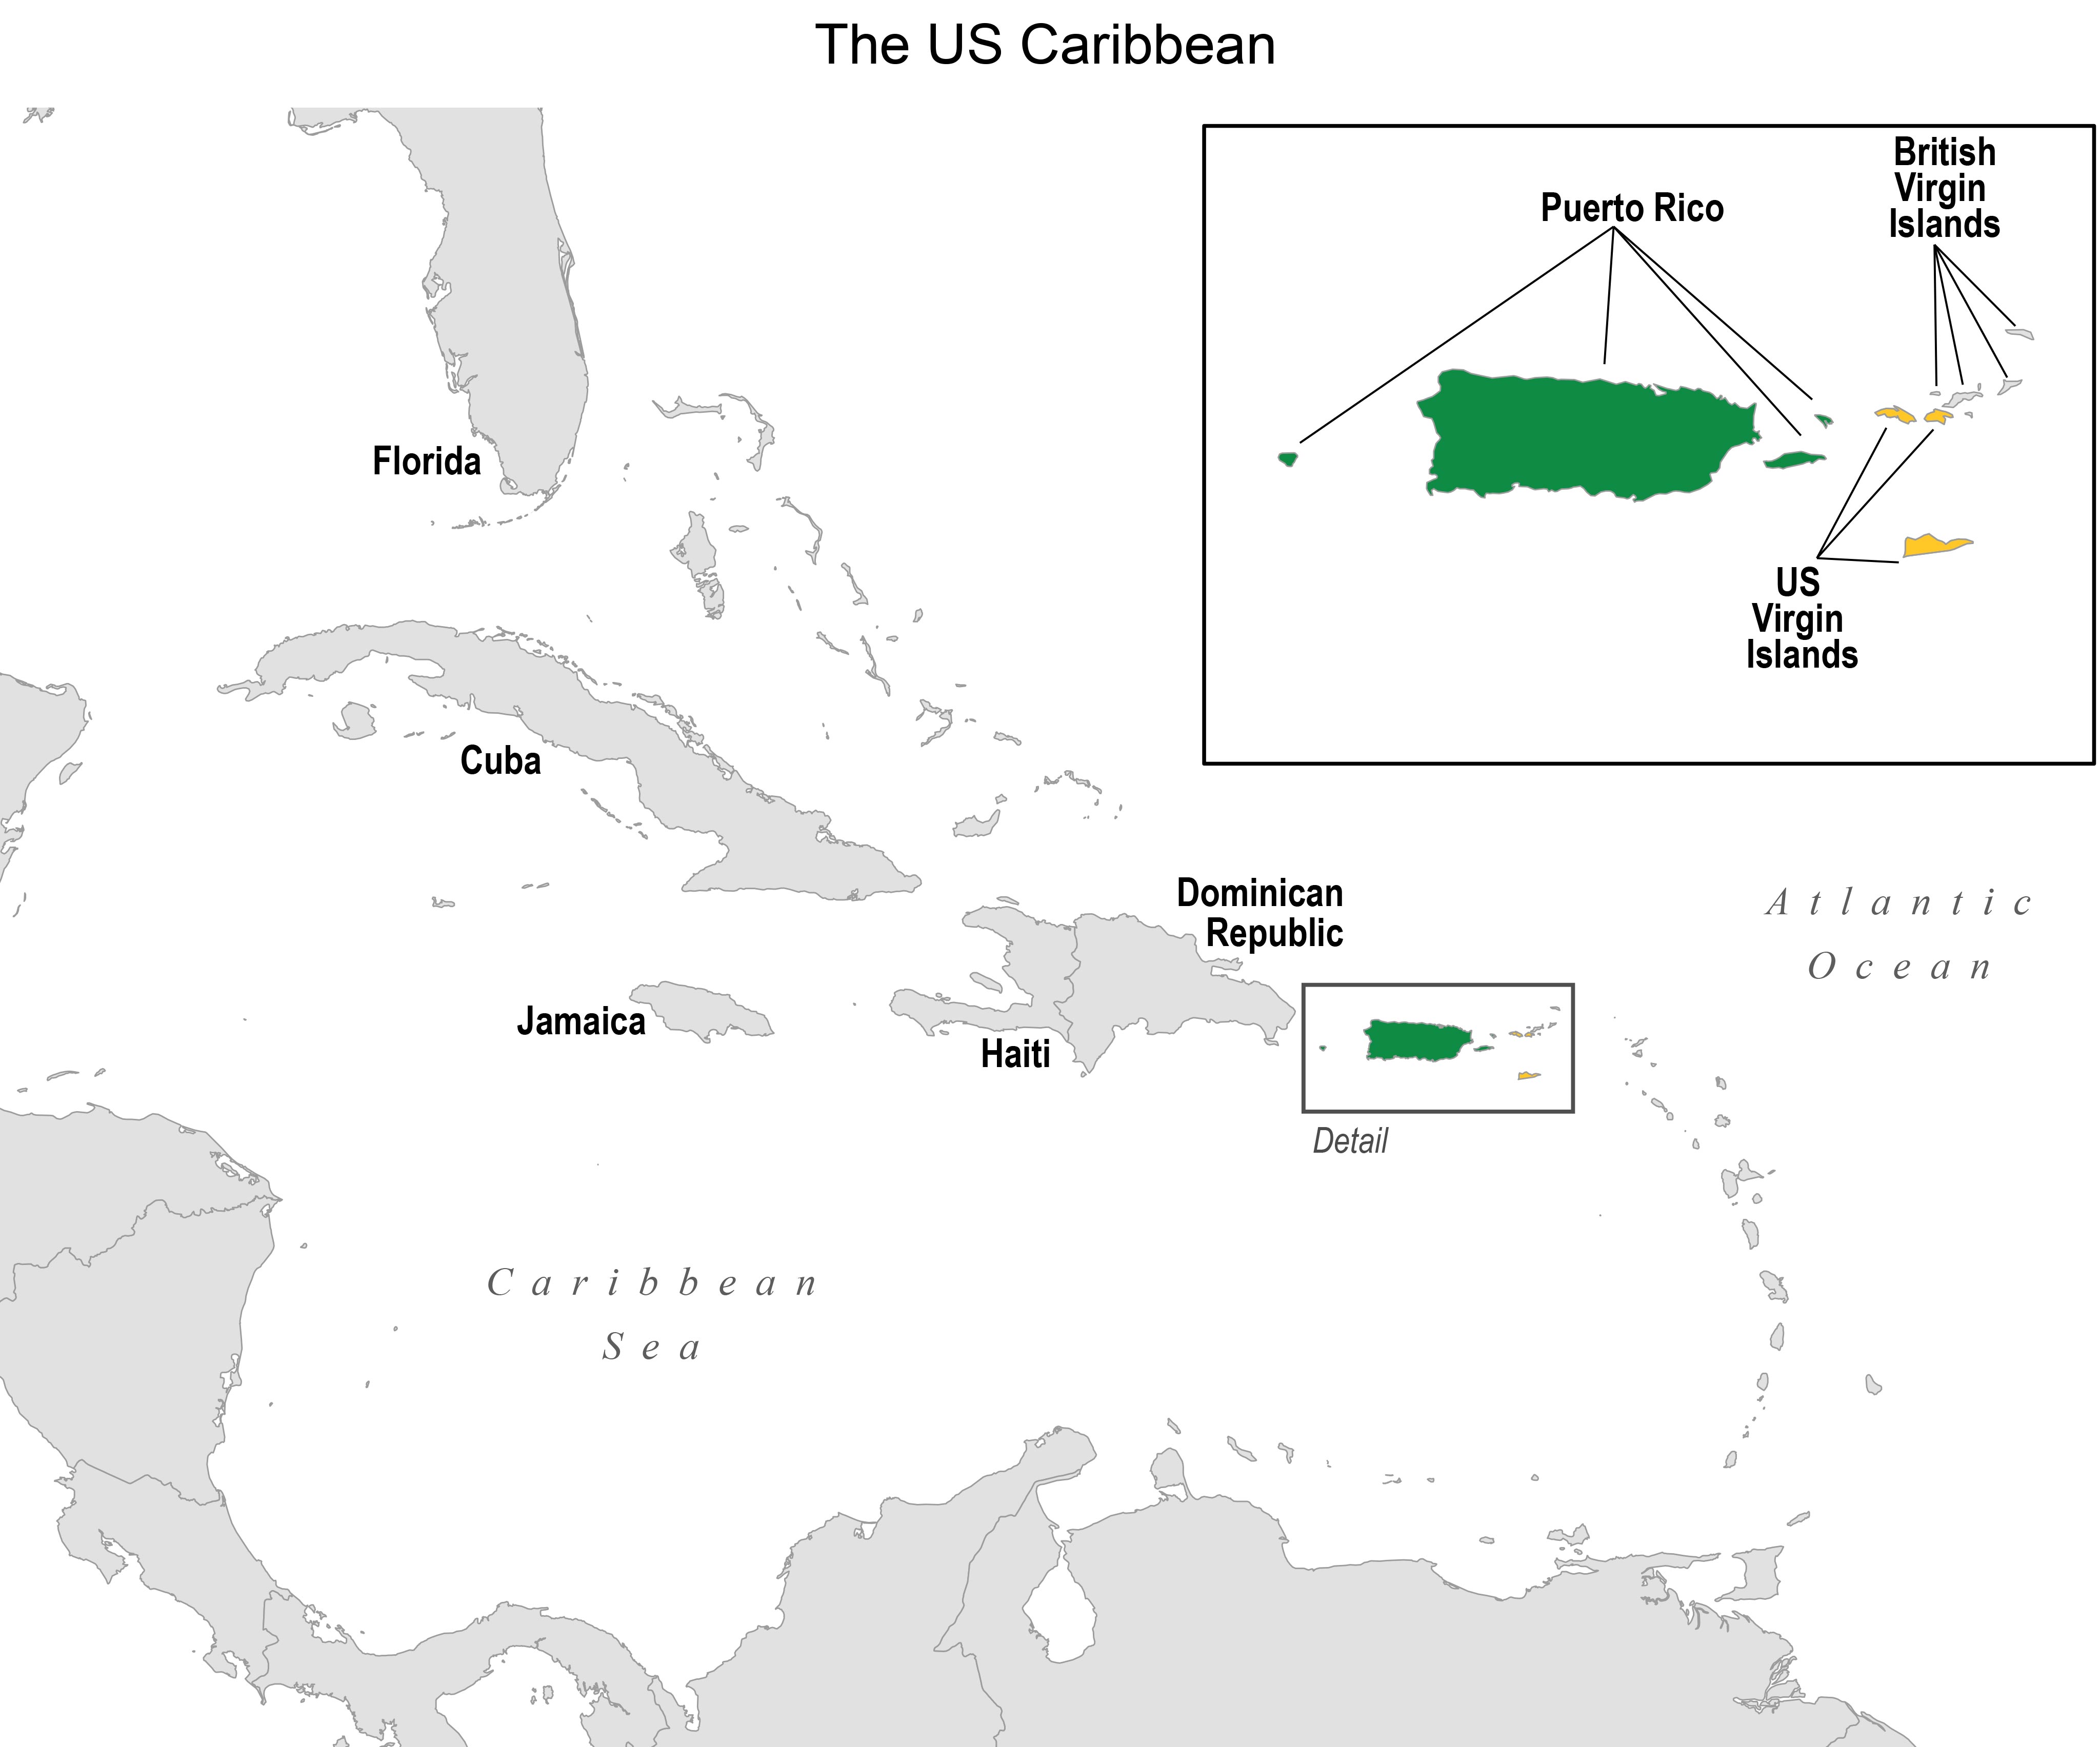 The US Caribbean